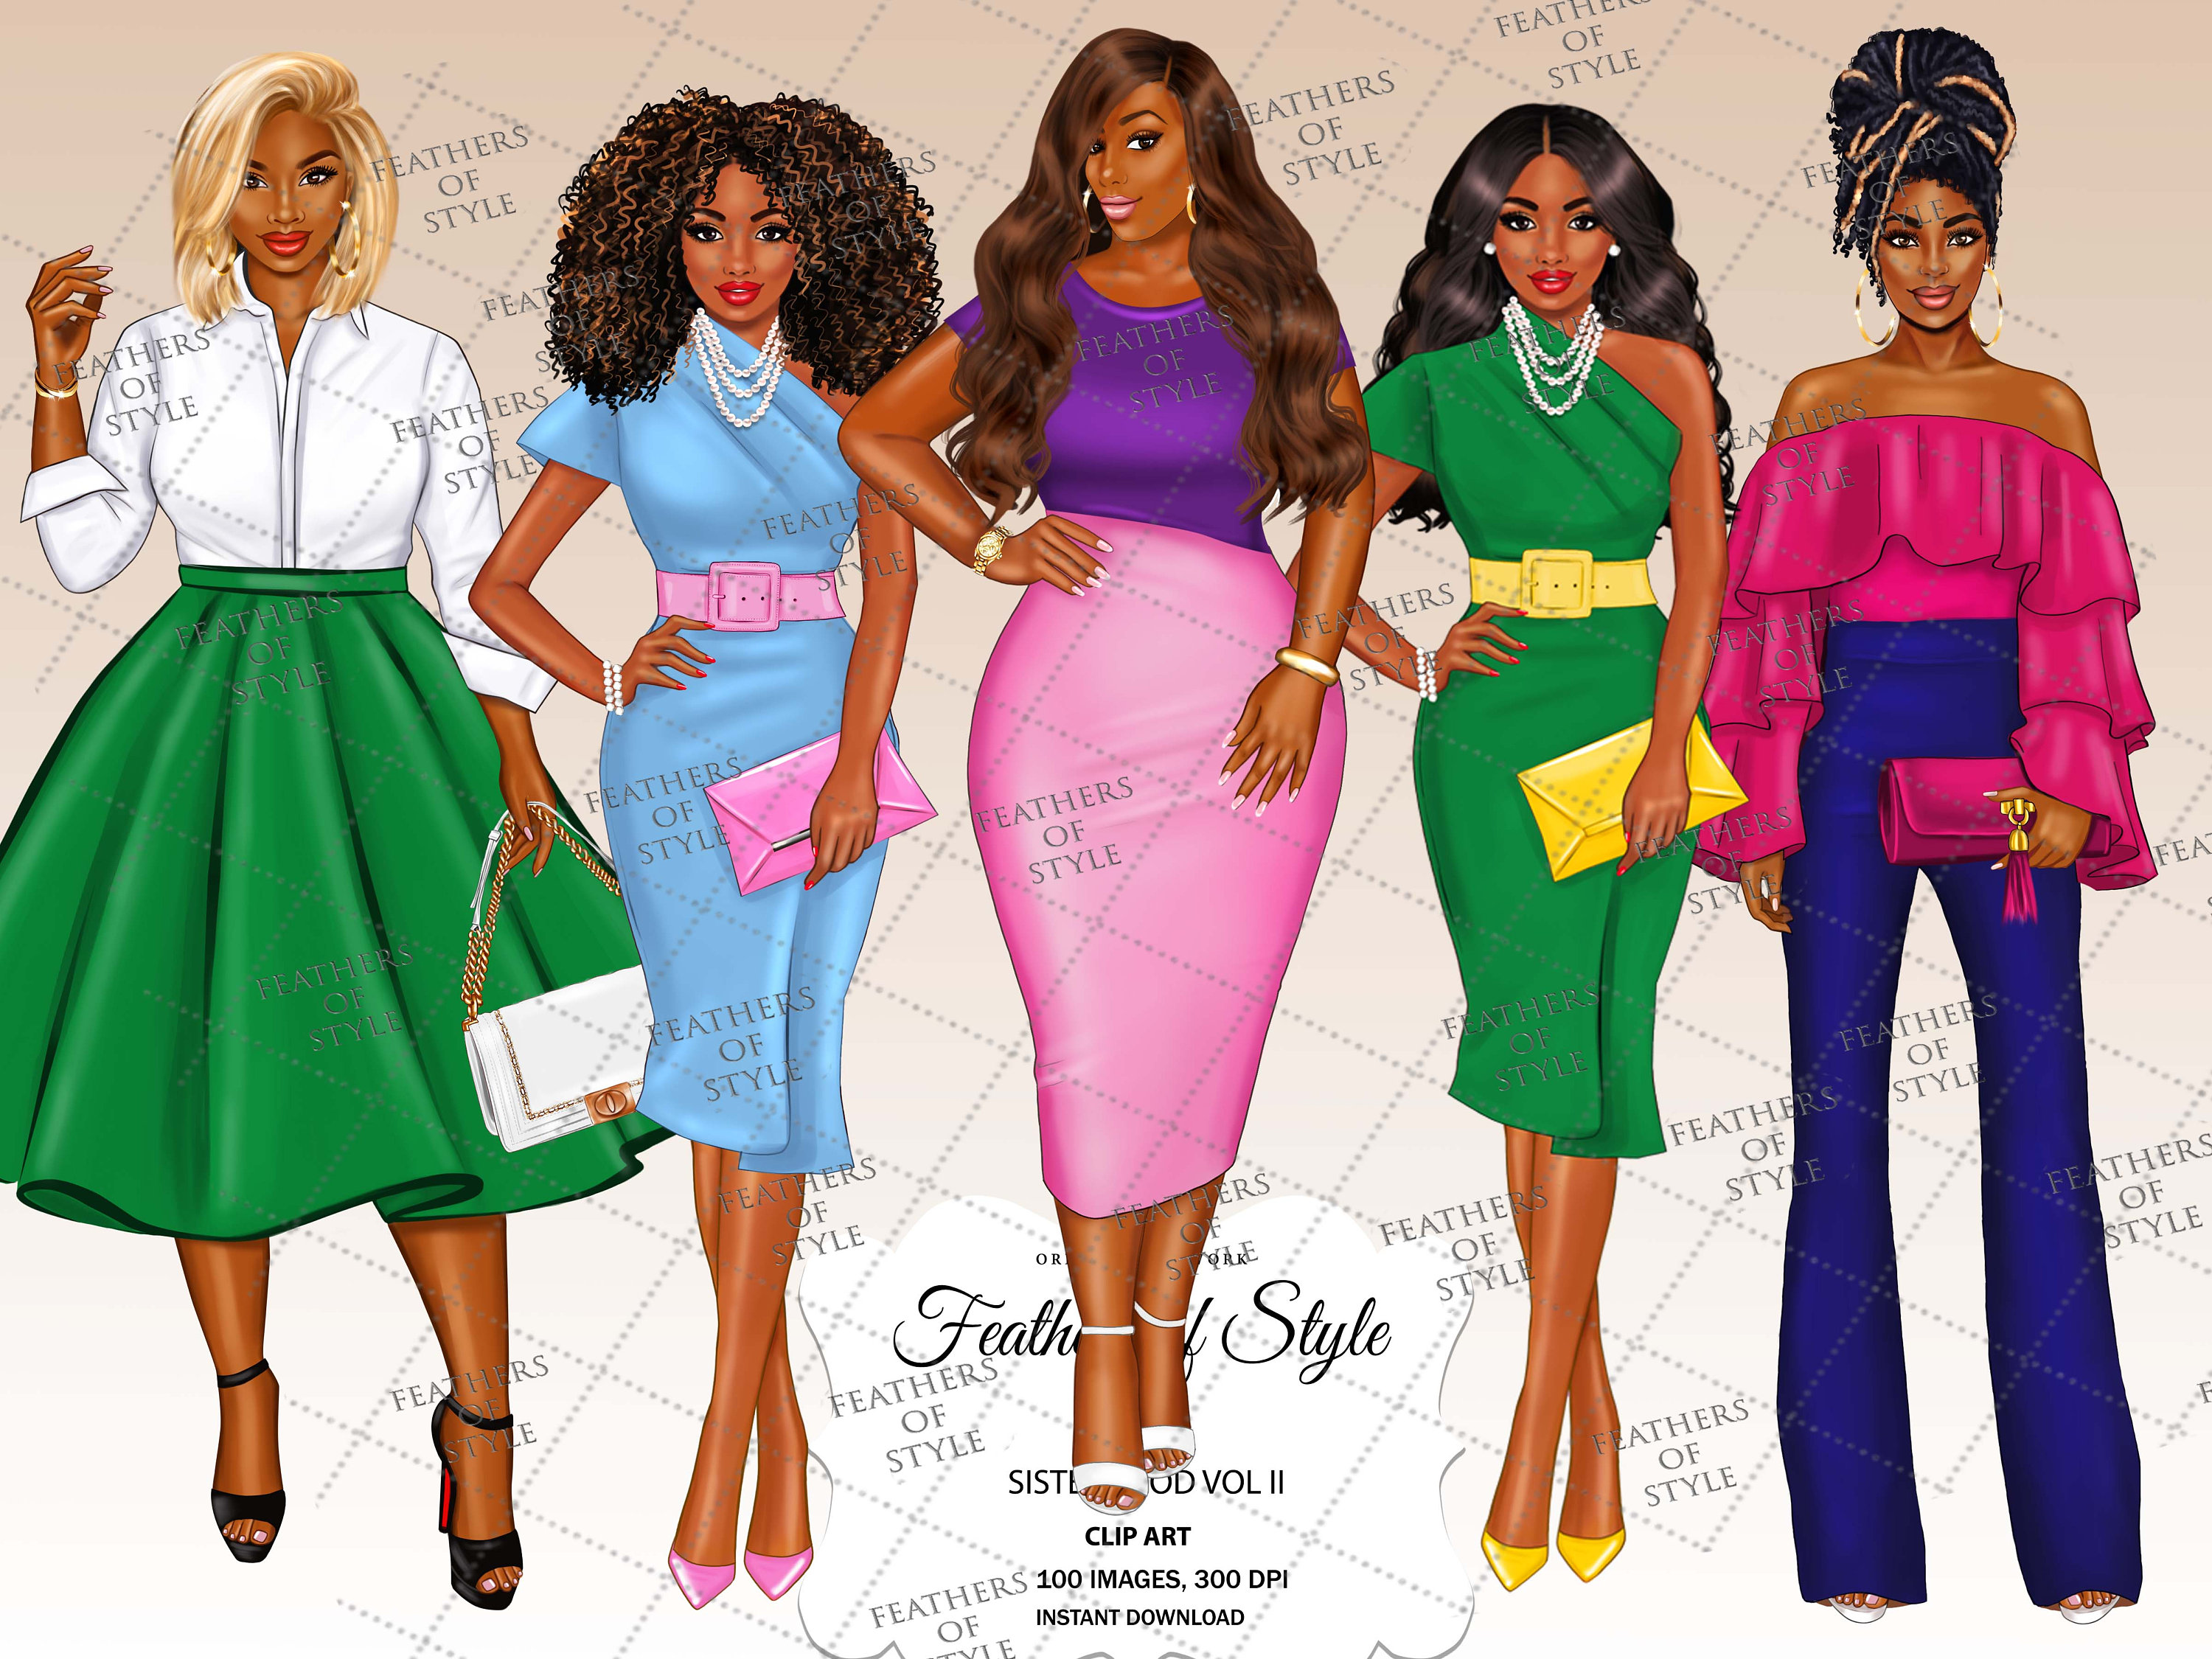 Afro girls clipart Fashion clipart Sorority clipart African American glitter Sisterhood clipart Girl Boss Fashion